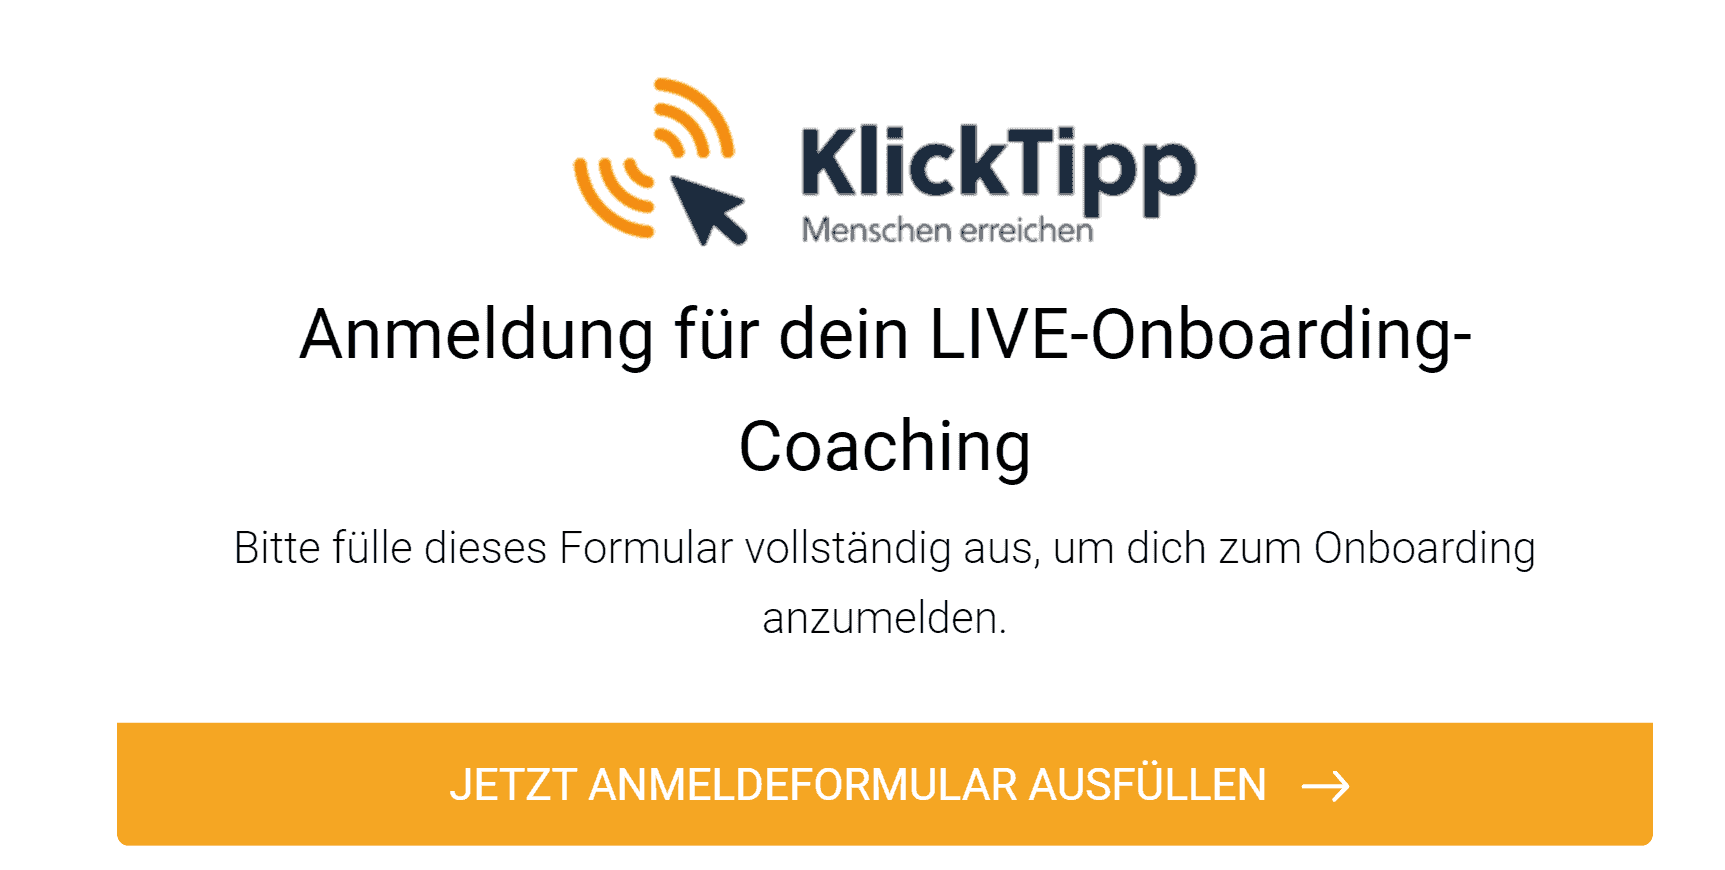 Klicktipp Live Onboarding Coaching Anmeldung